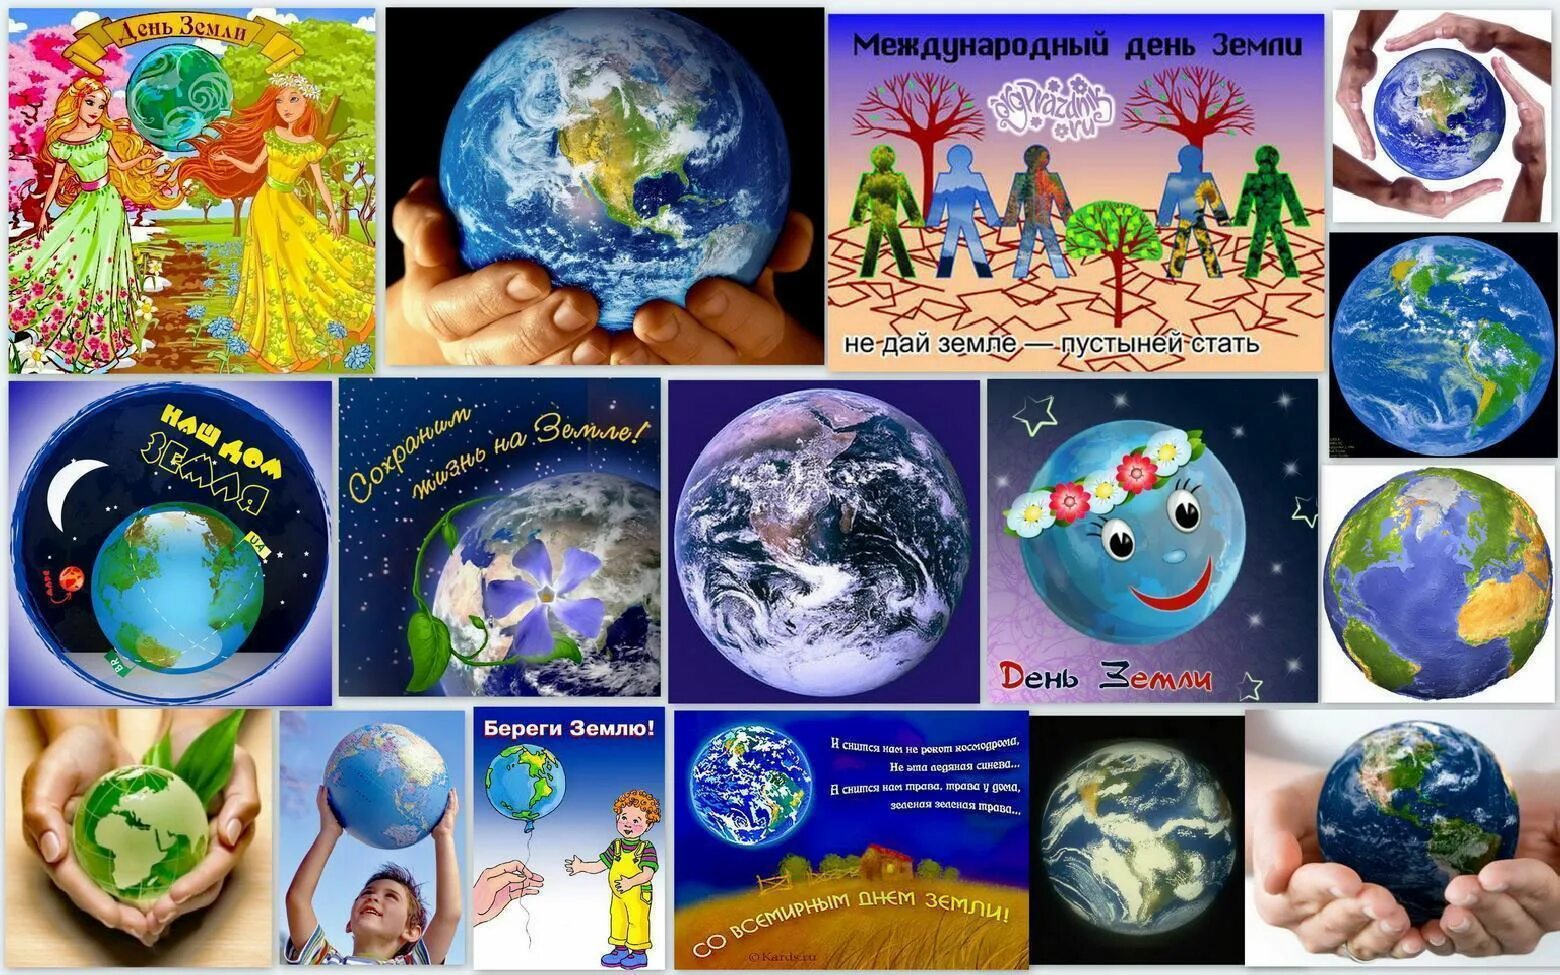 Картинки день земли 22 апреля. Всемирный день земли. 22 Апреля день земли. День земли плакат. День земли картинки.